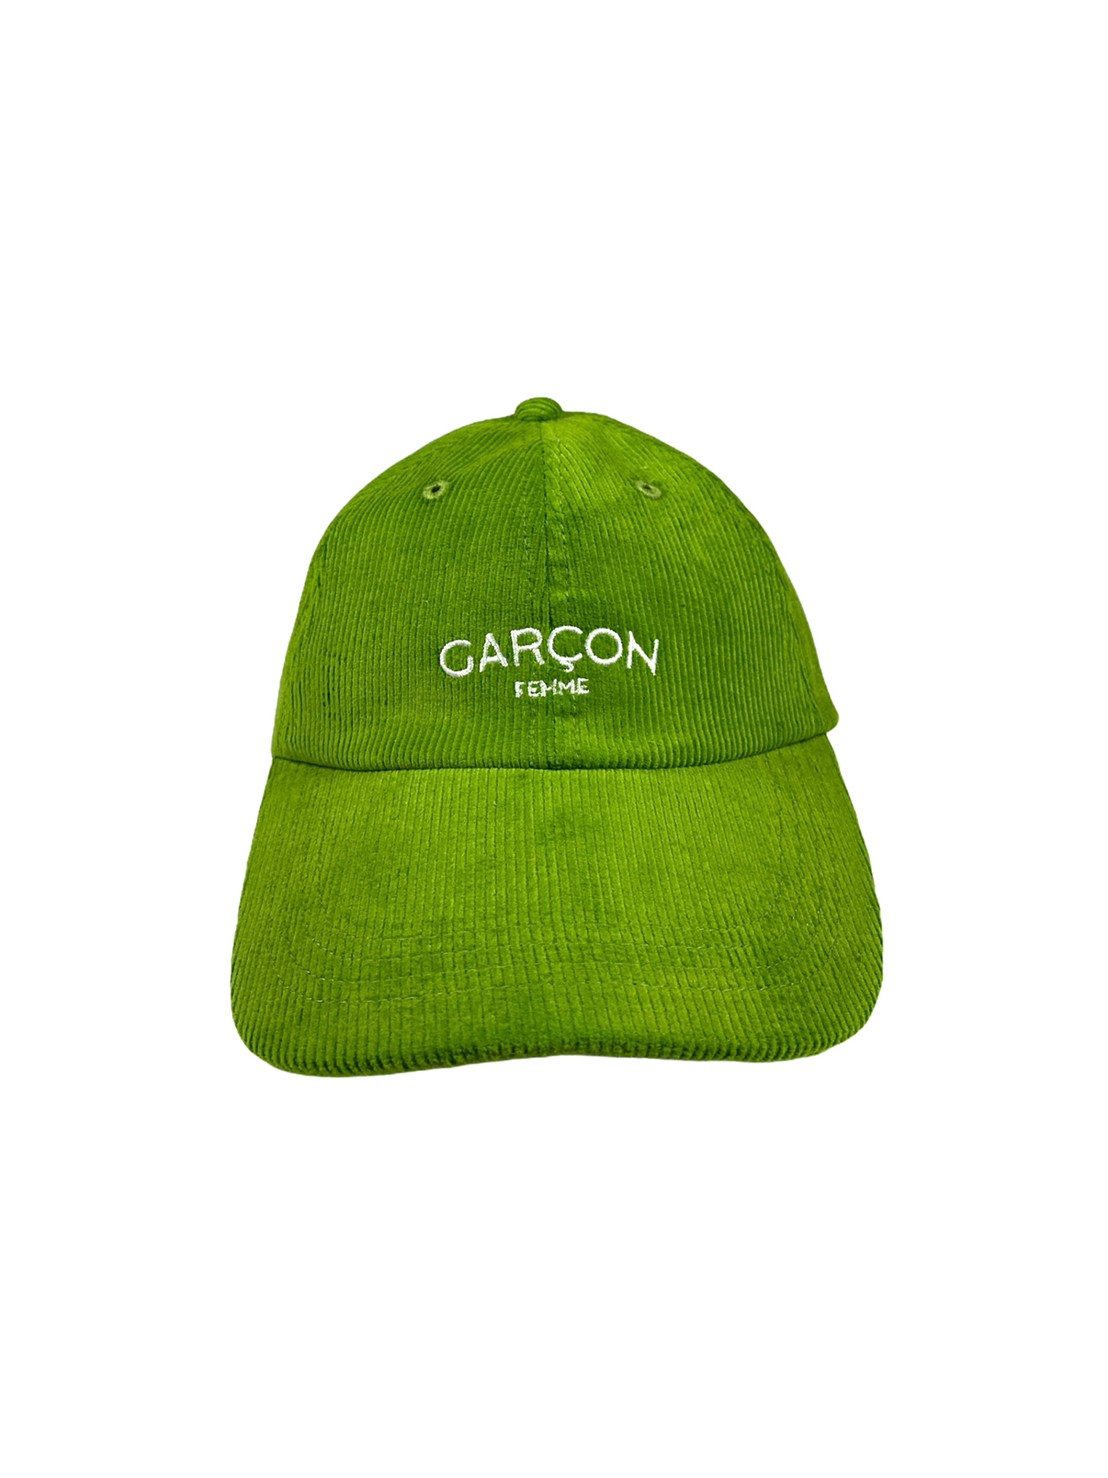 Garcon Cap - Femme (Shamrock Green)